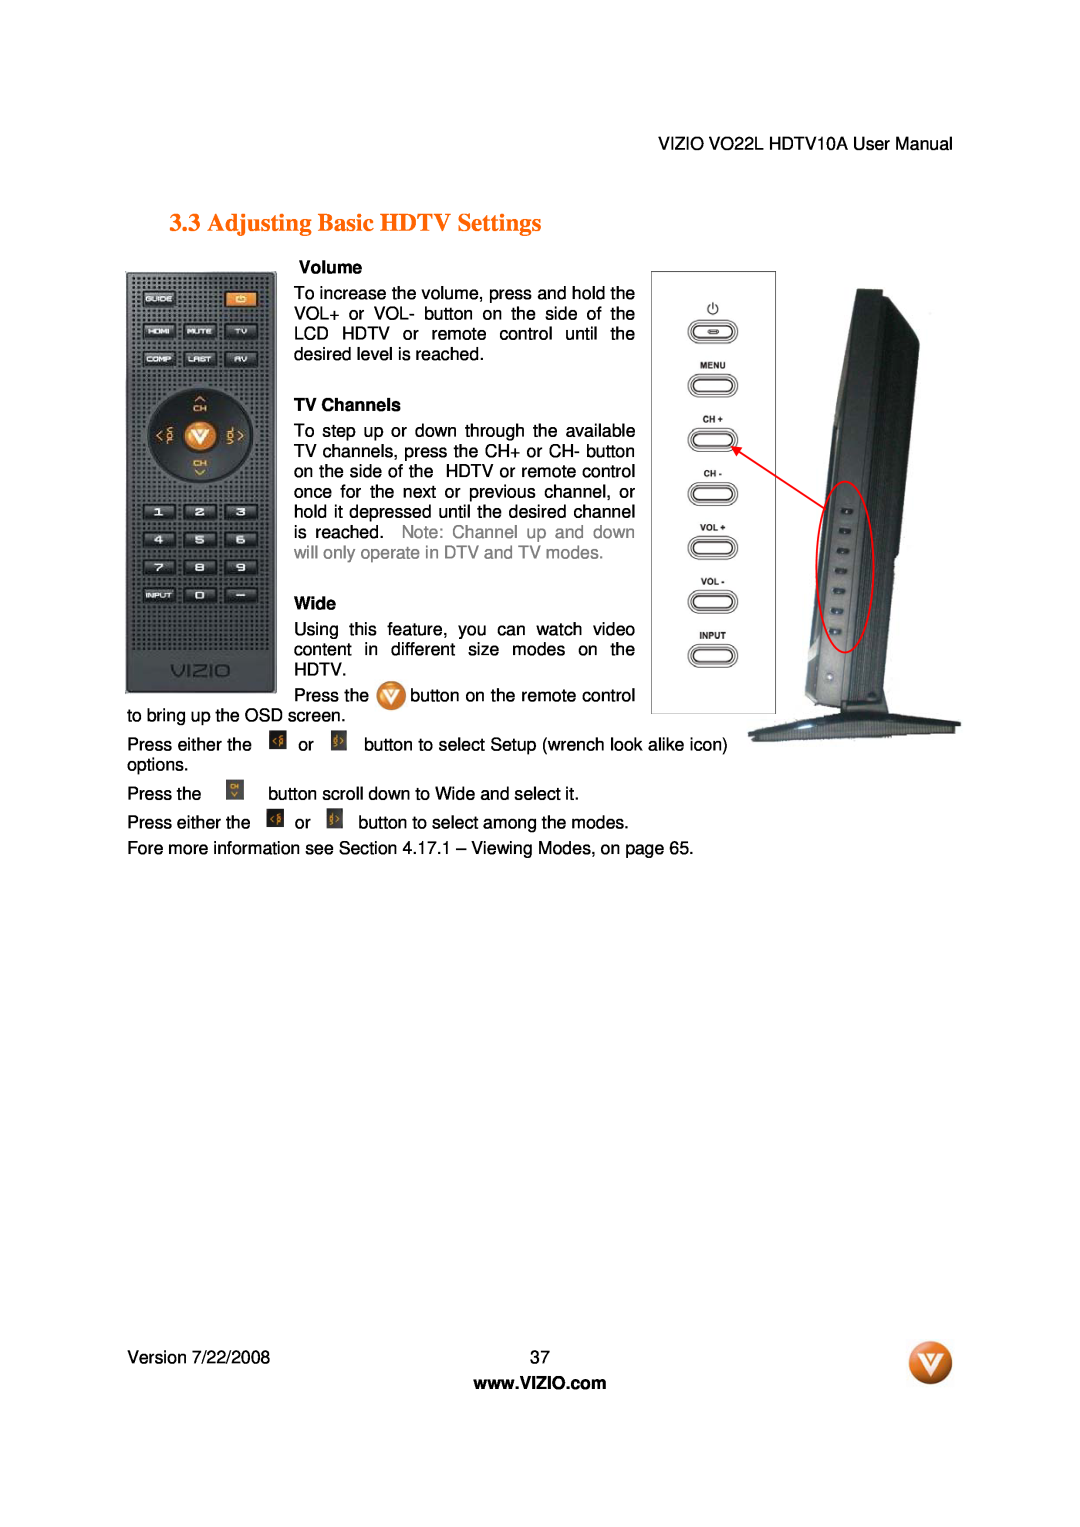 Vizio VO22L user manual Adjusting Basic HDTV Settings, Volume, TV Channels, Wide 